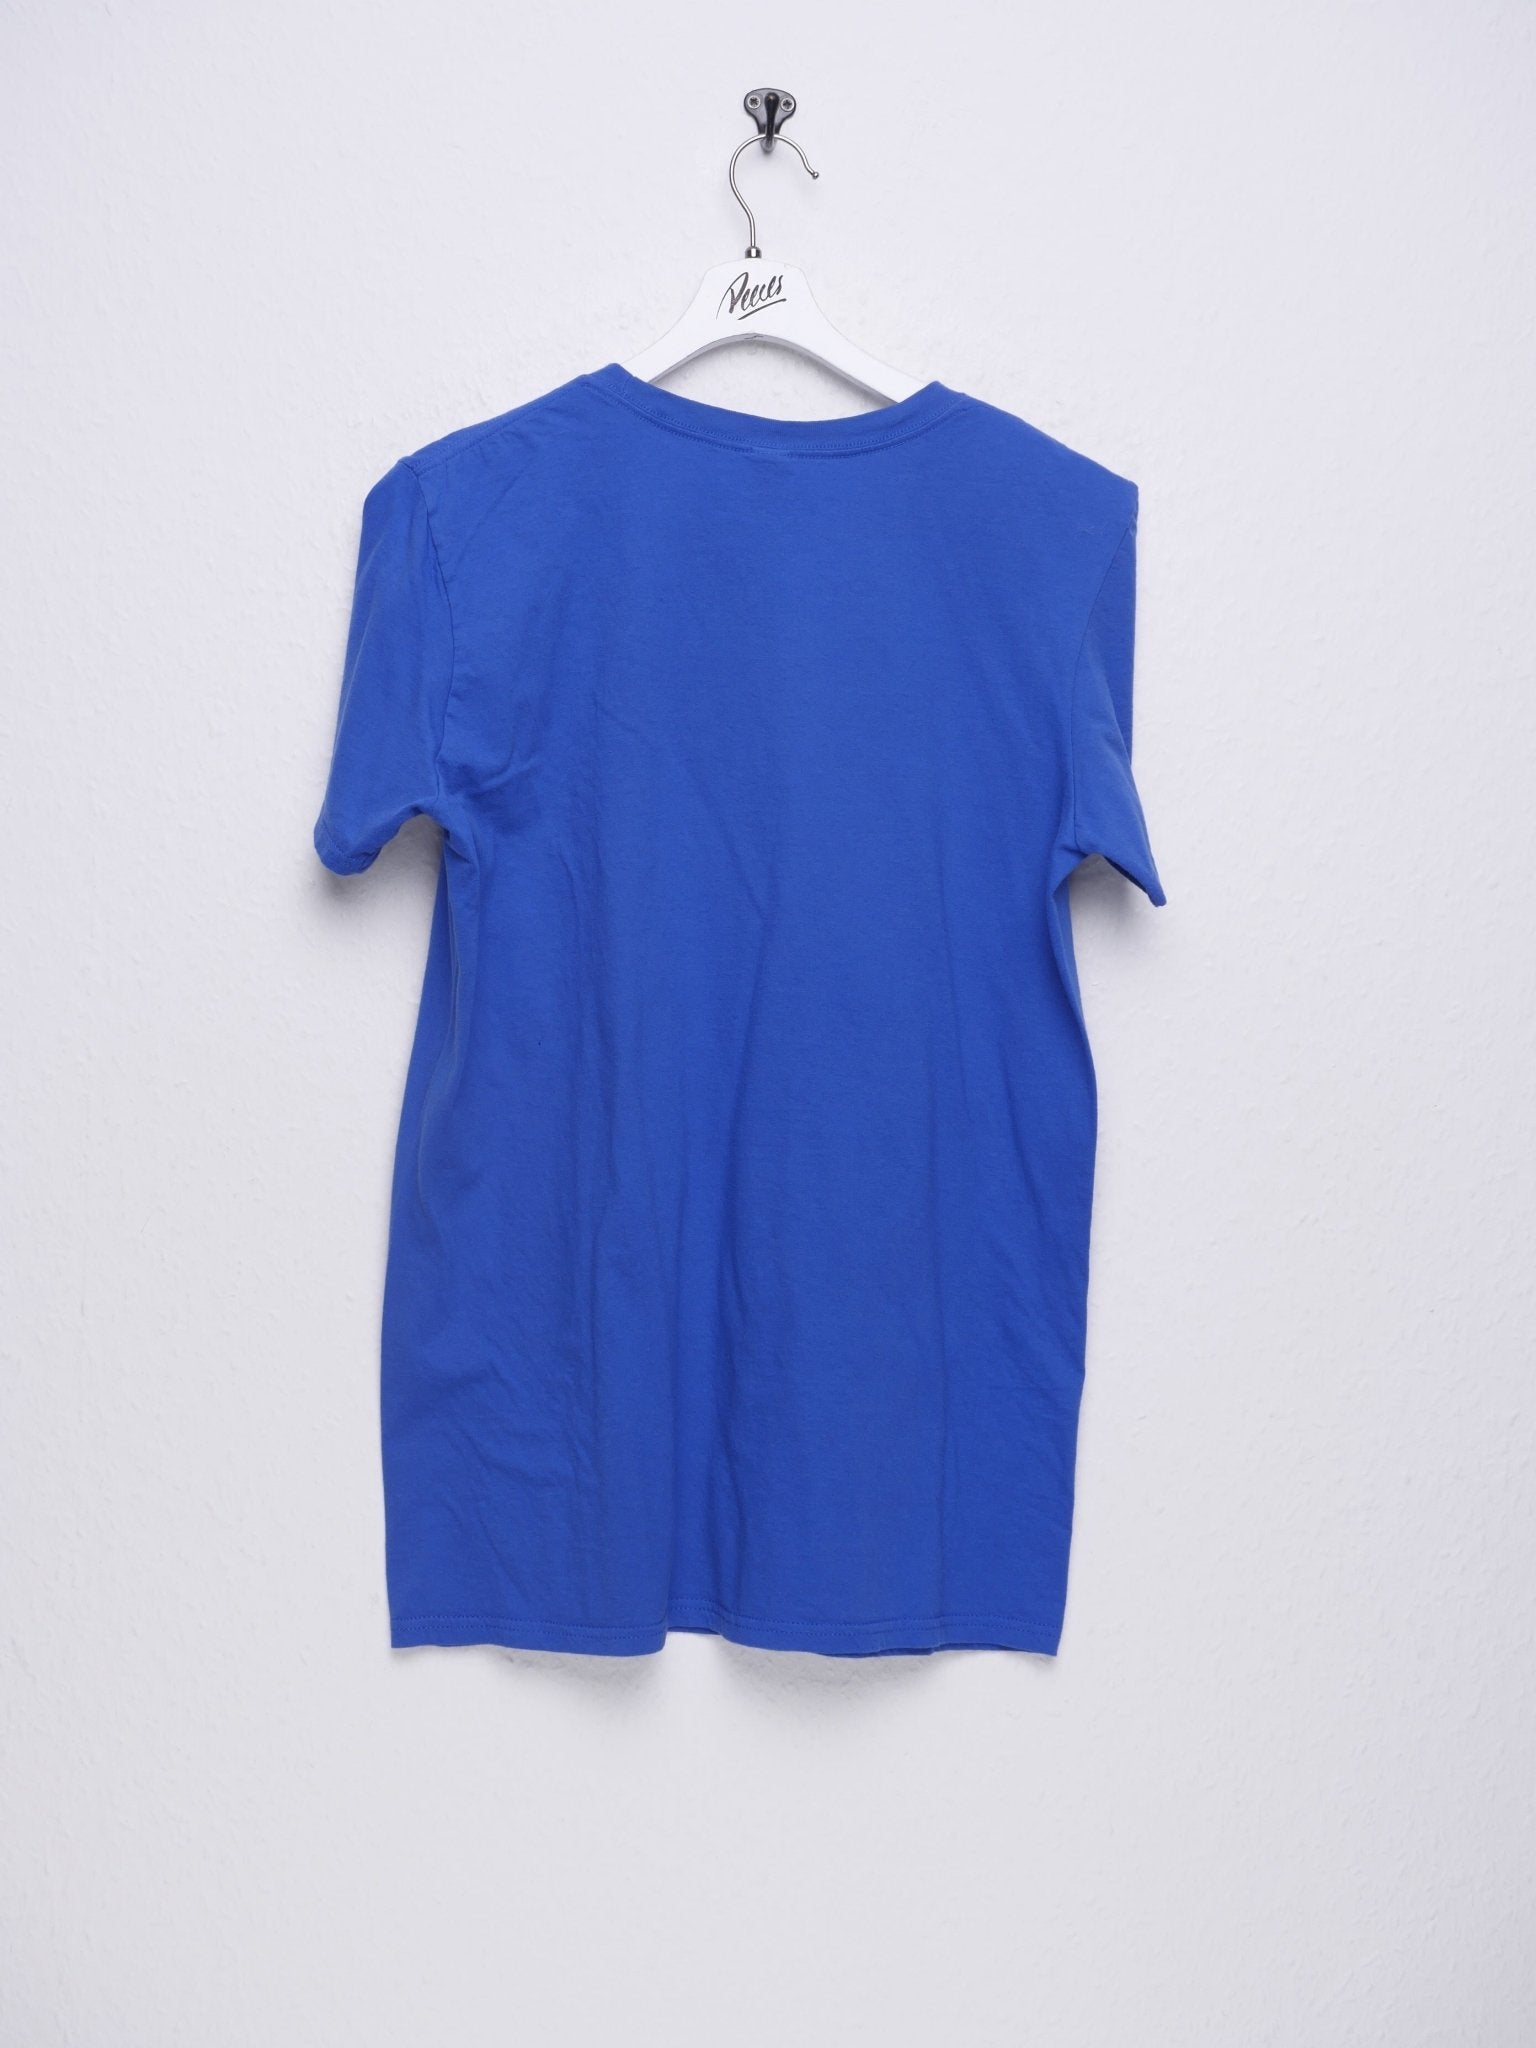 Anvil printed Graphic blue Vintage Shirt - Peeces